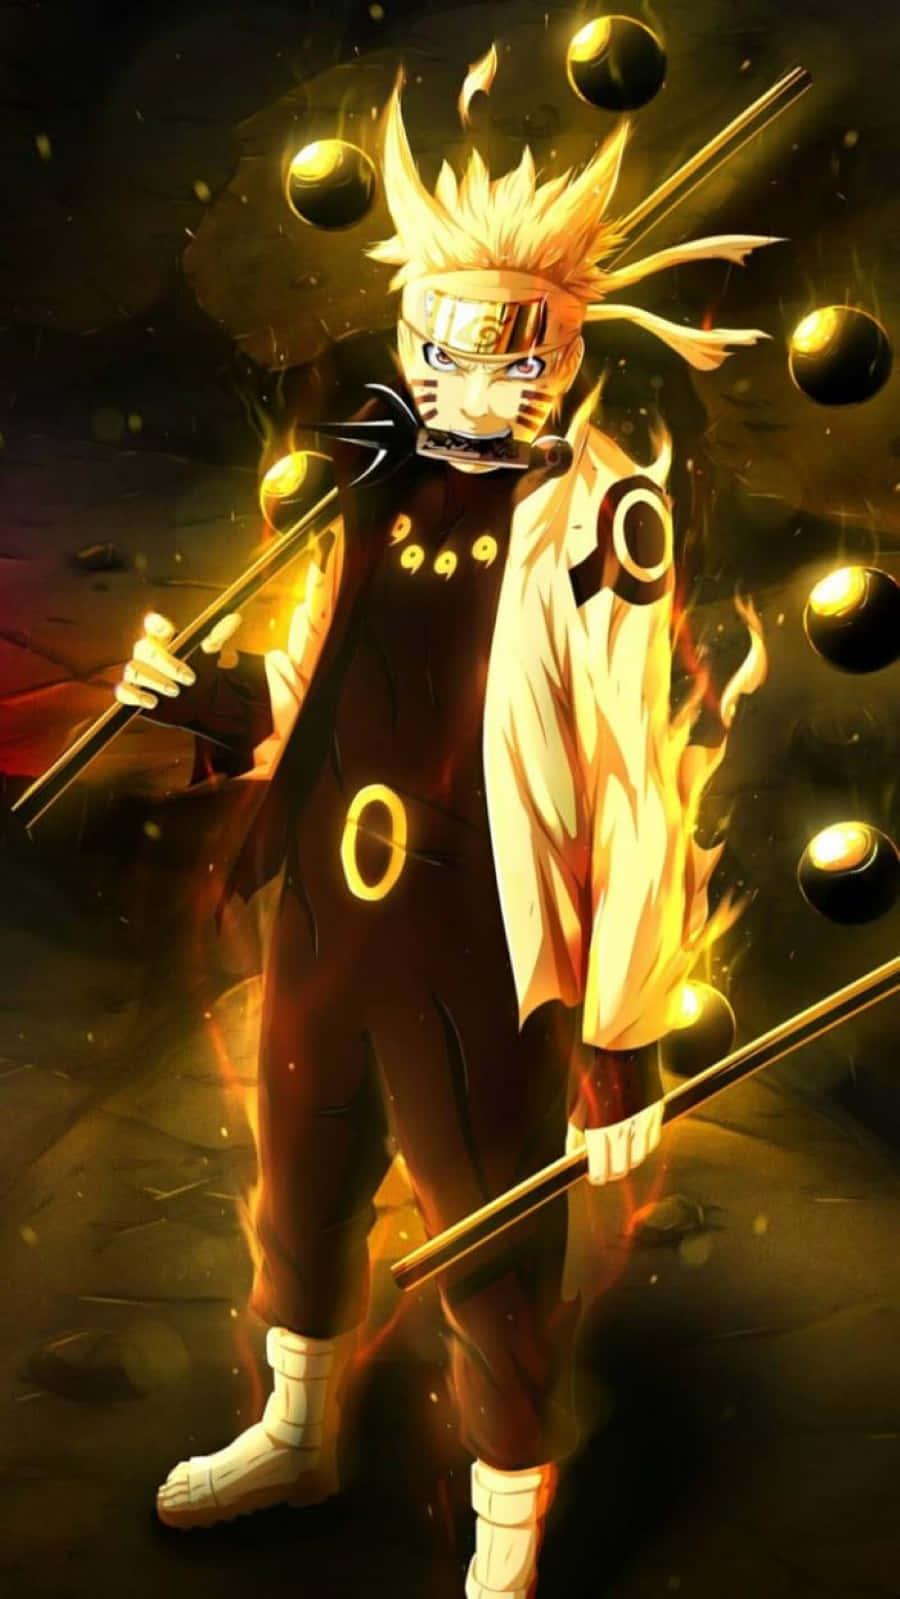 Naruto Uzumaki in the powerful Sage Mode stance Wallpaper